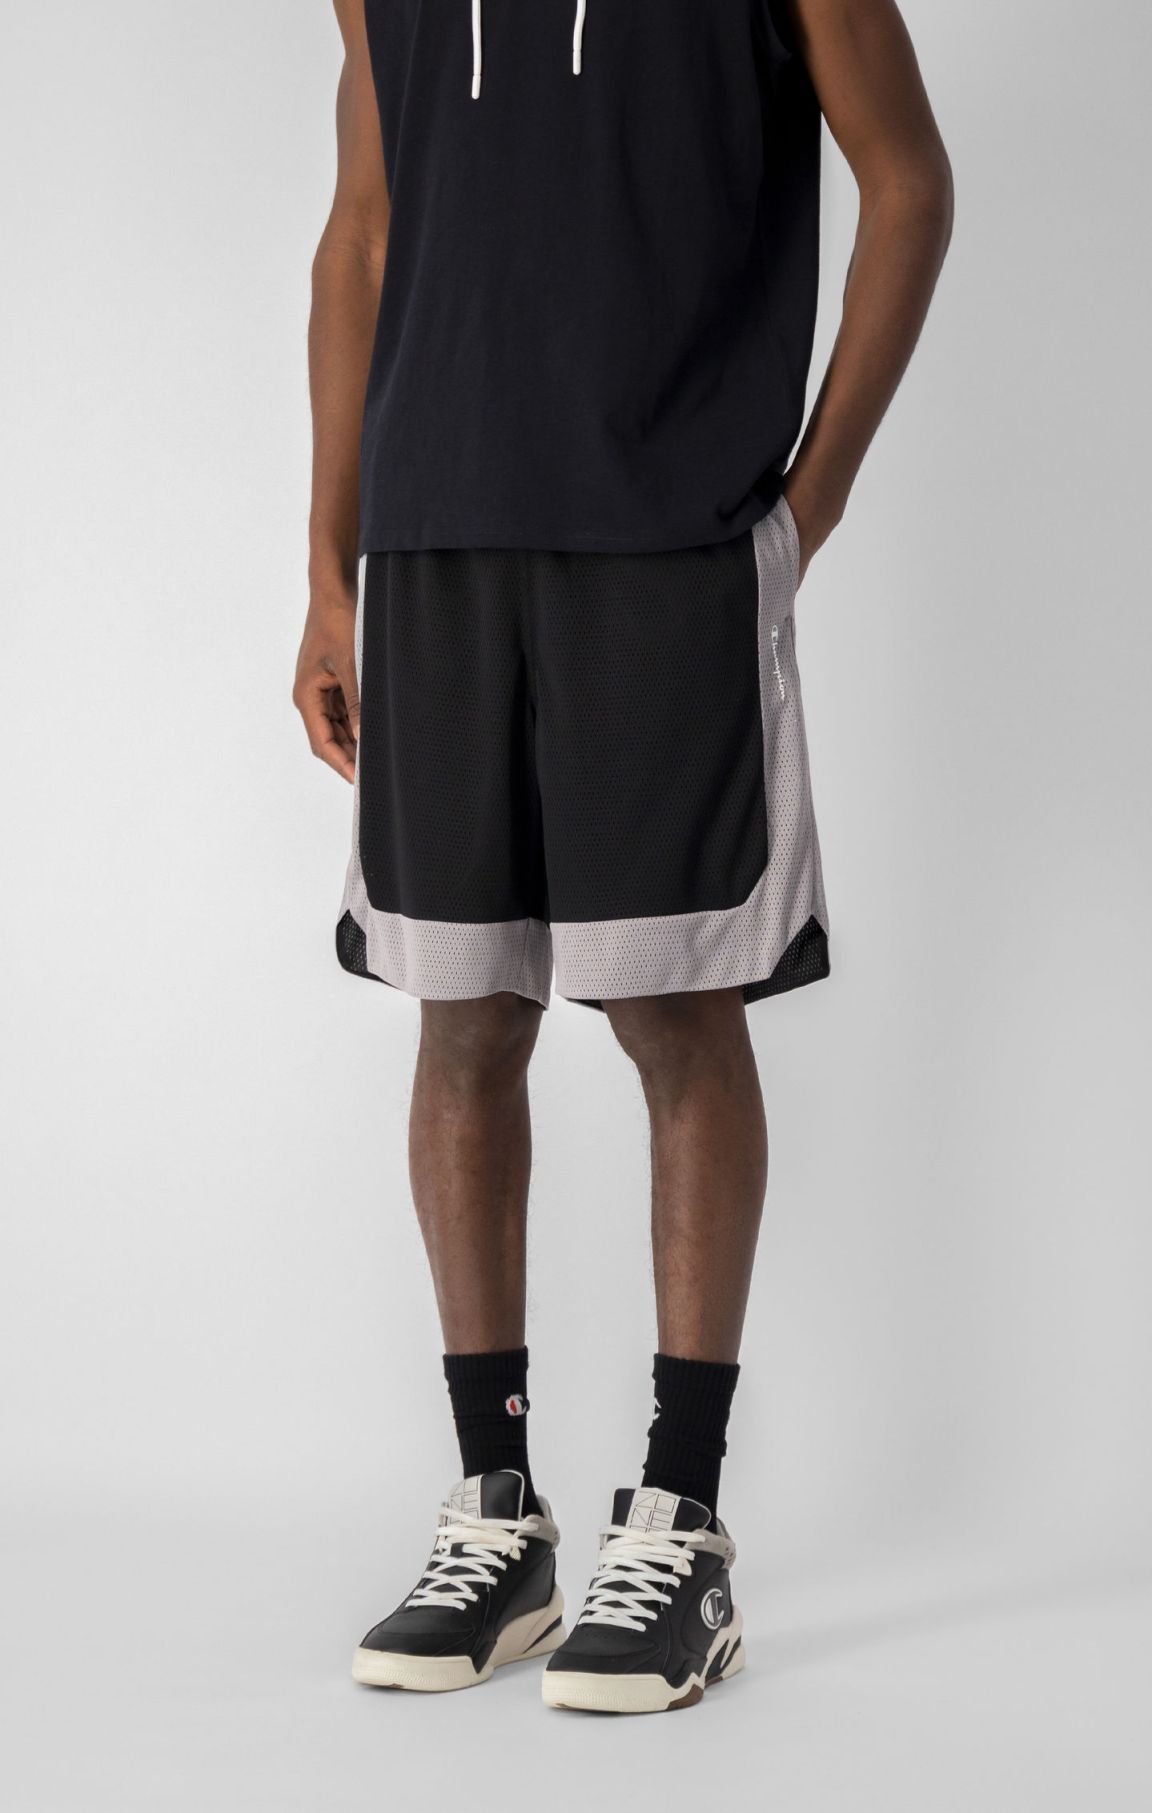 Pantalón corto de baloncesto de malla suave